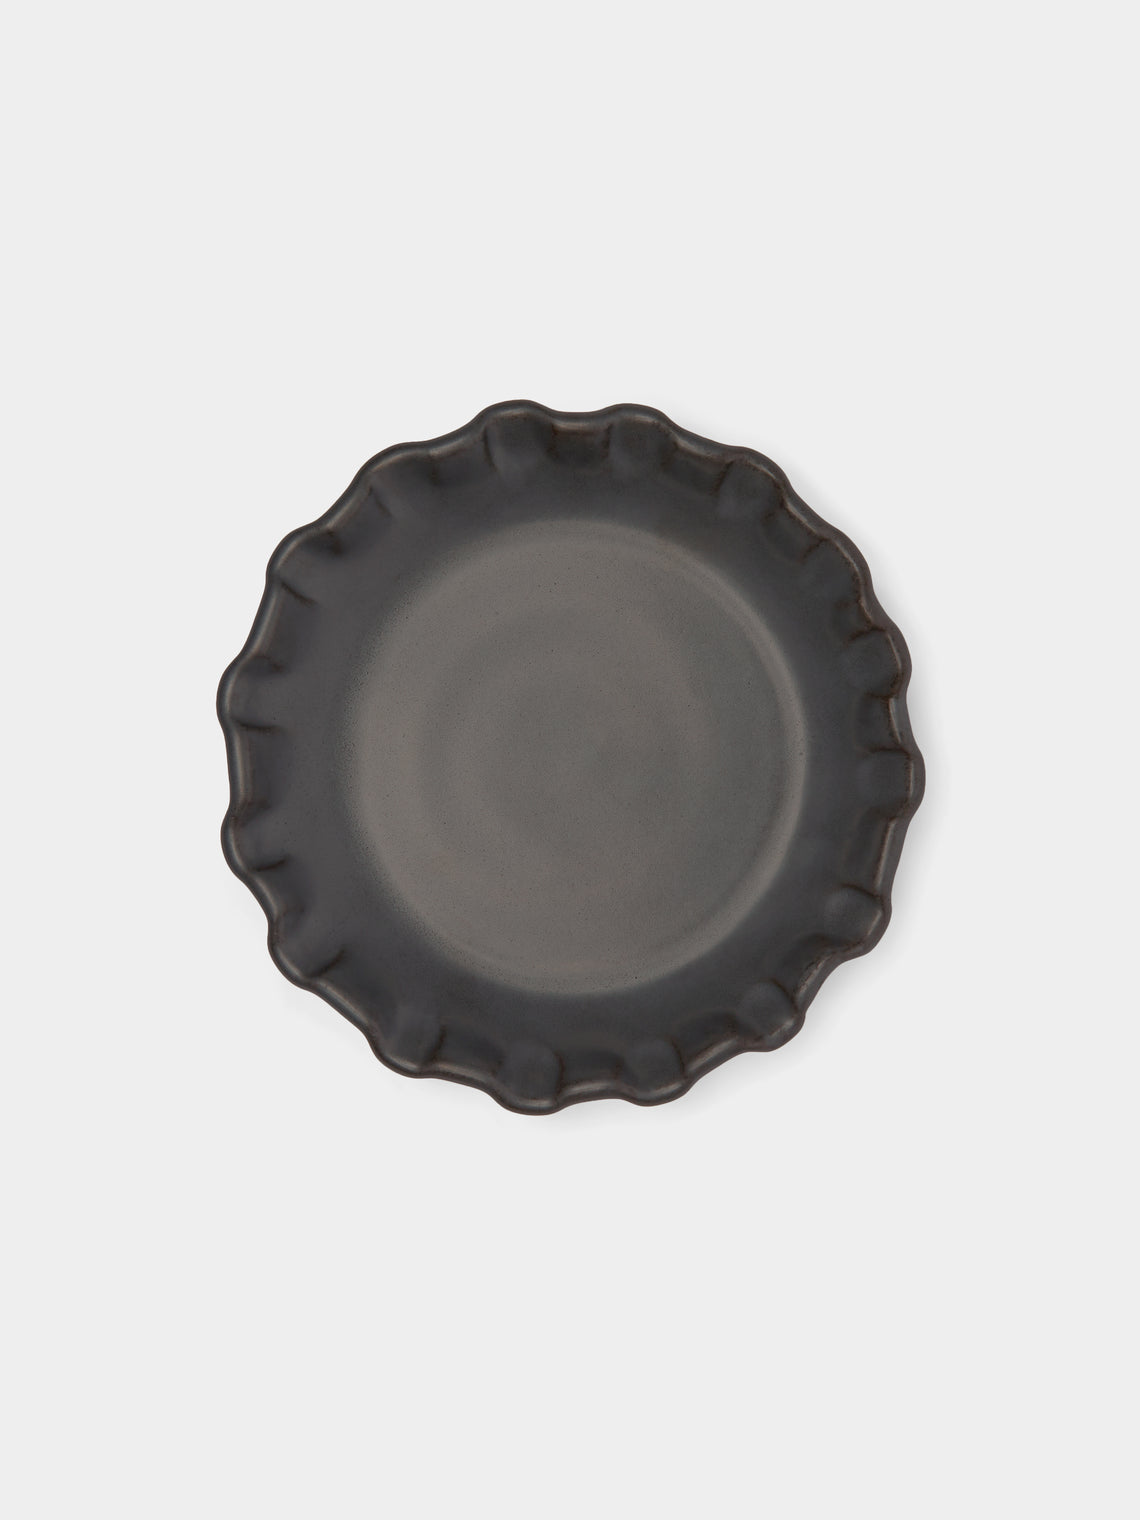 Perla Valtierra - Hand-Glazed Ceramic Lipped Dessert Plates (Set of 4) - Black - ABASK - 